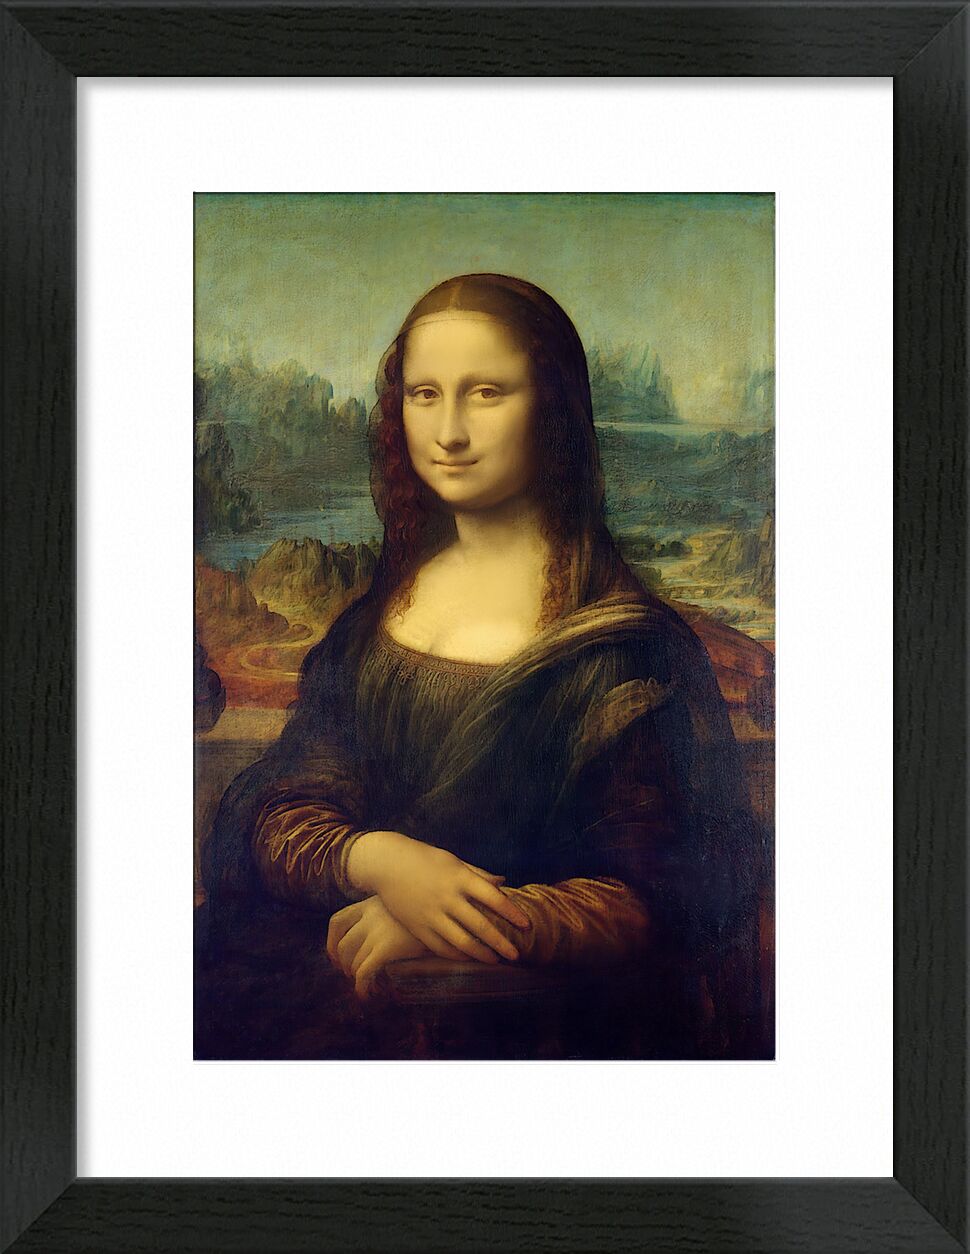 Mona Lisa von Bildende Kunst, Prodi Art, Die mona LIsa, mona lisa, da Vinci, Geheimnis, Landschaft, Frau, Malerei, Leonard da vinci